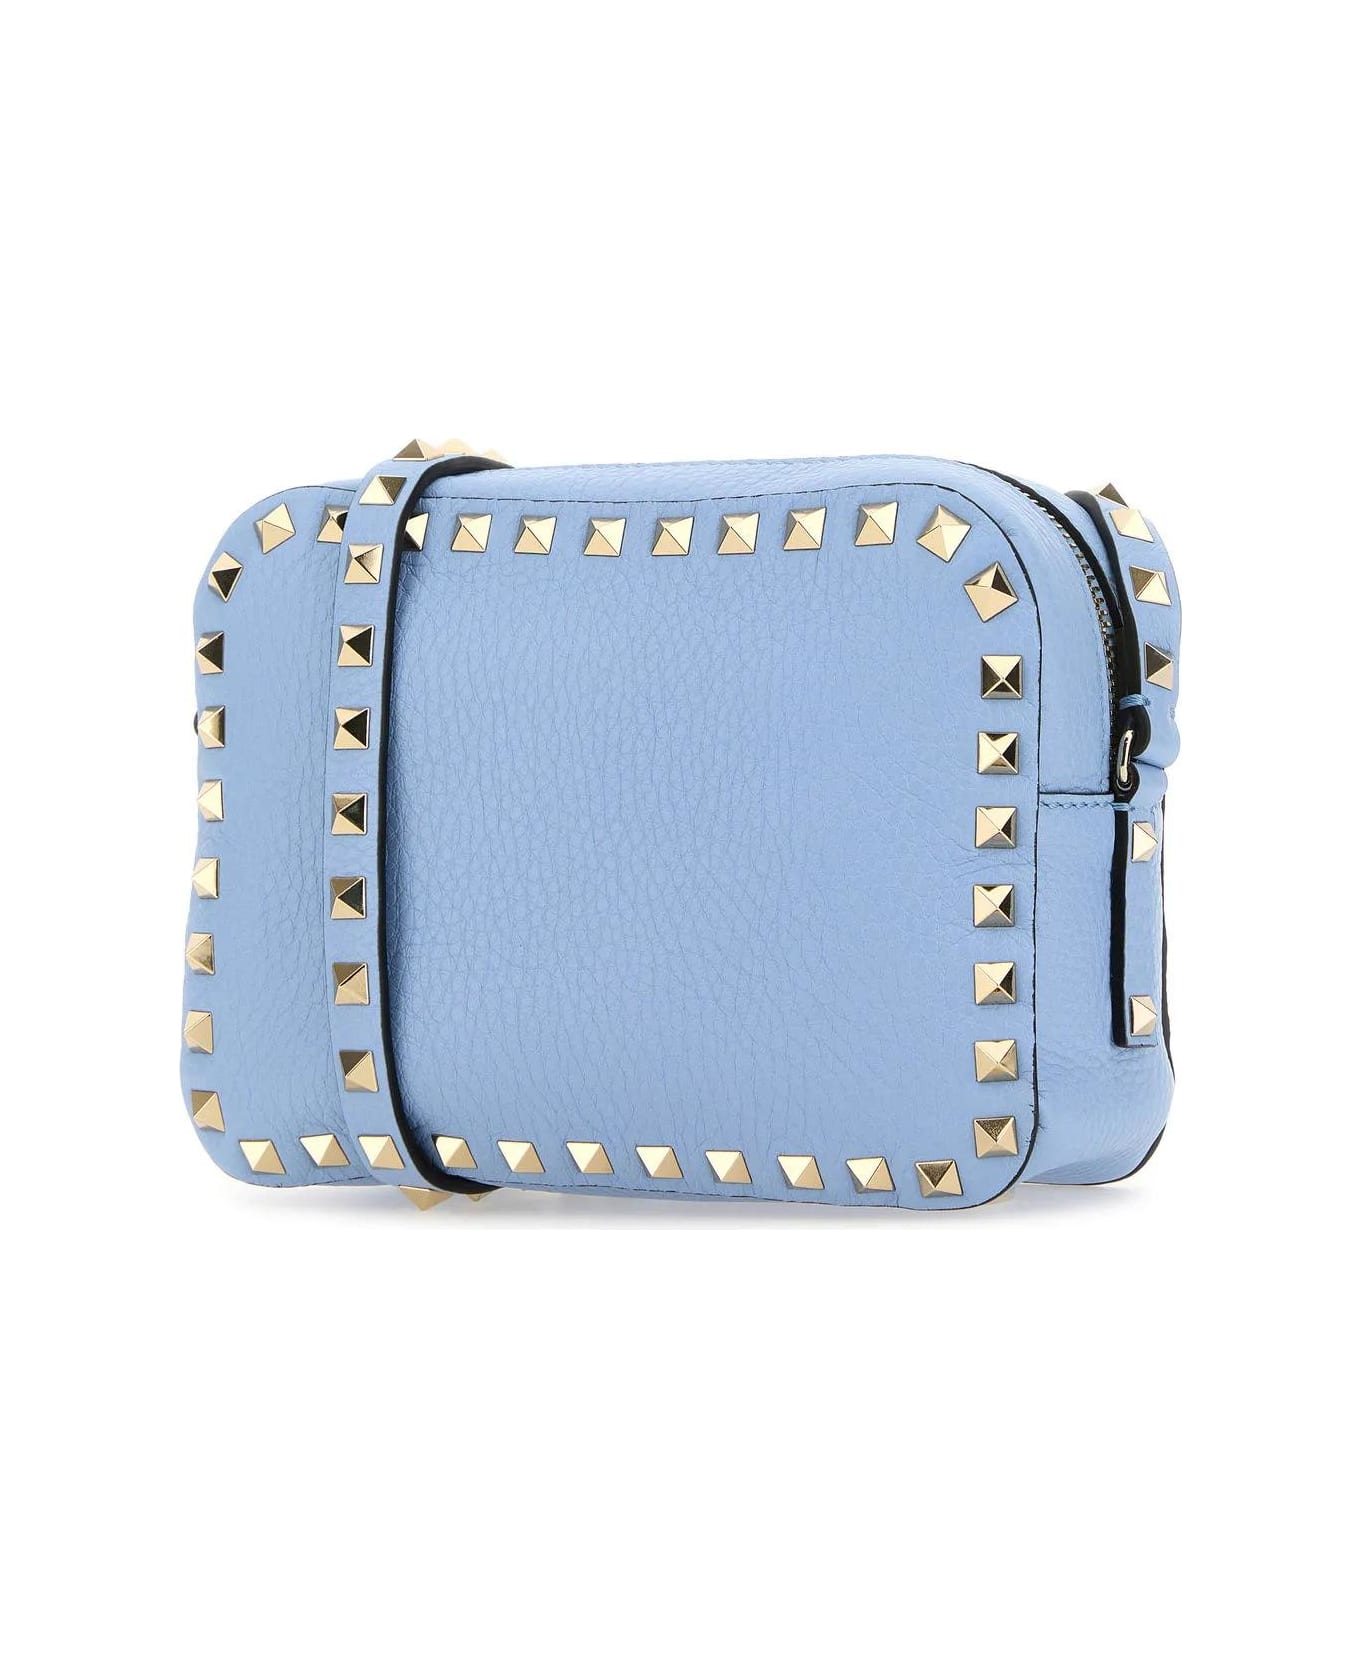 Valentino Garavani Light Blue Leather Rockstud Crossbody Bag - Blue